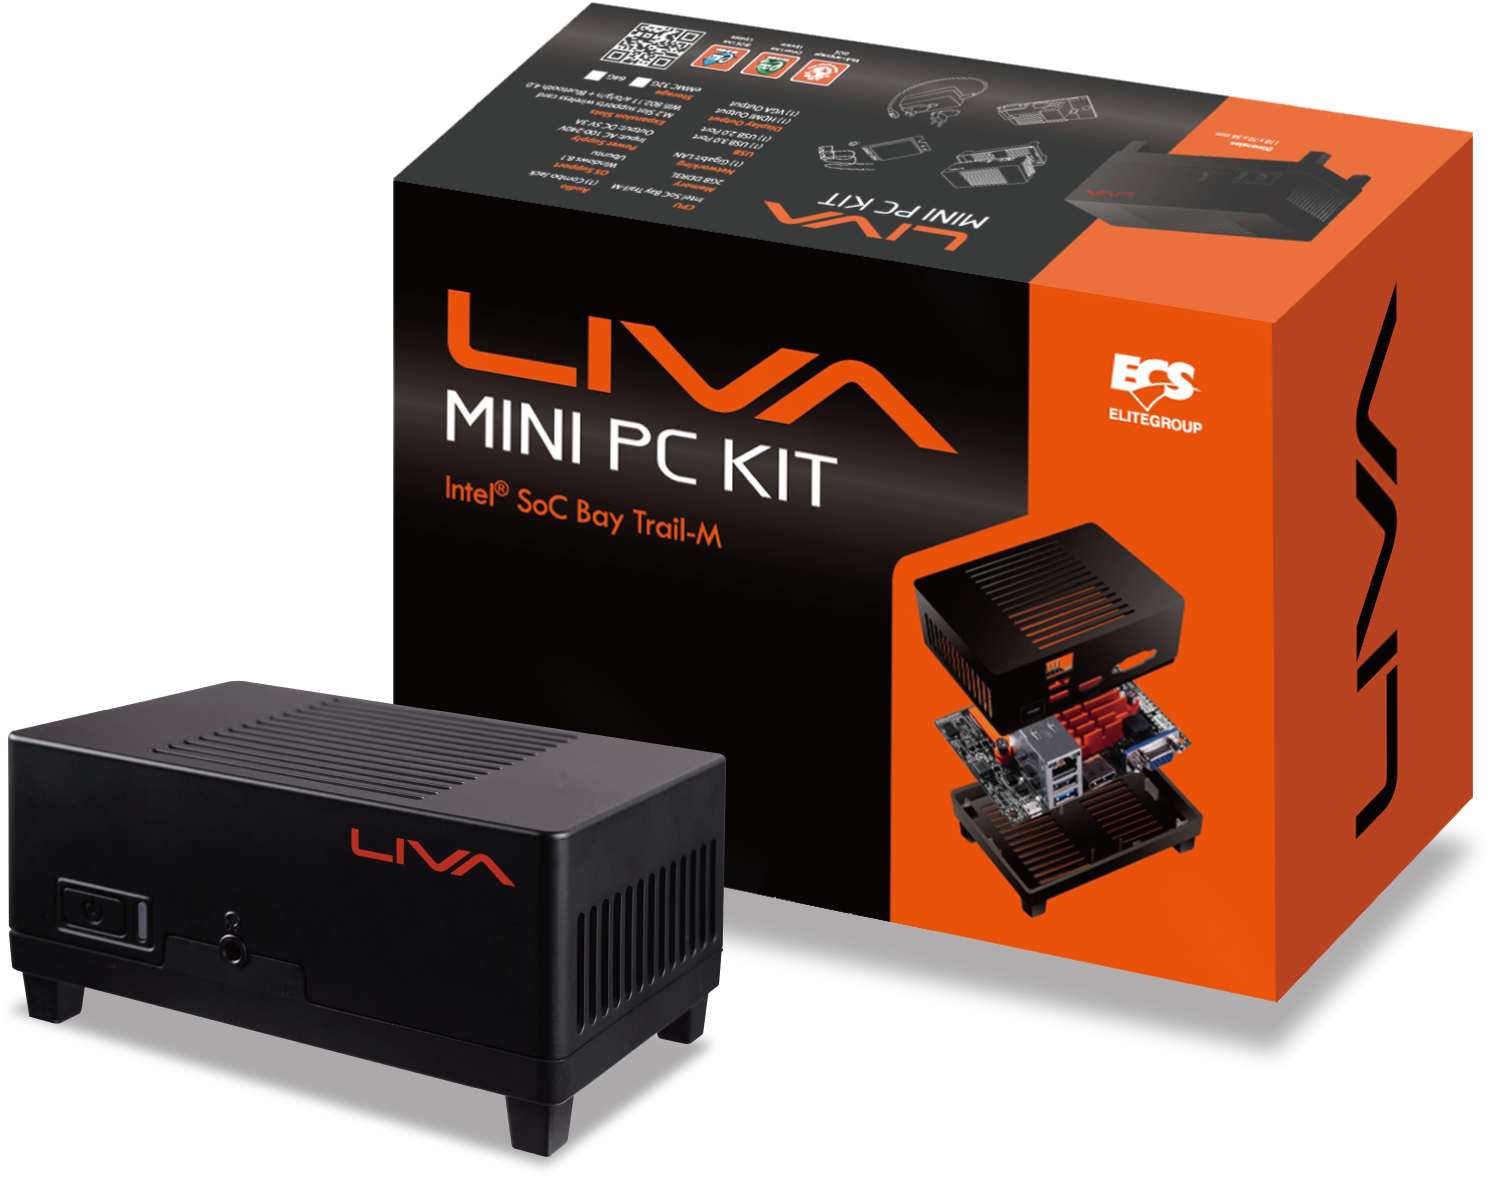 Ecs Introduces Liva World's Smallest Windows-based - Liva Mini Pc Kit (1656x1295), Png Download